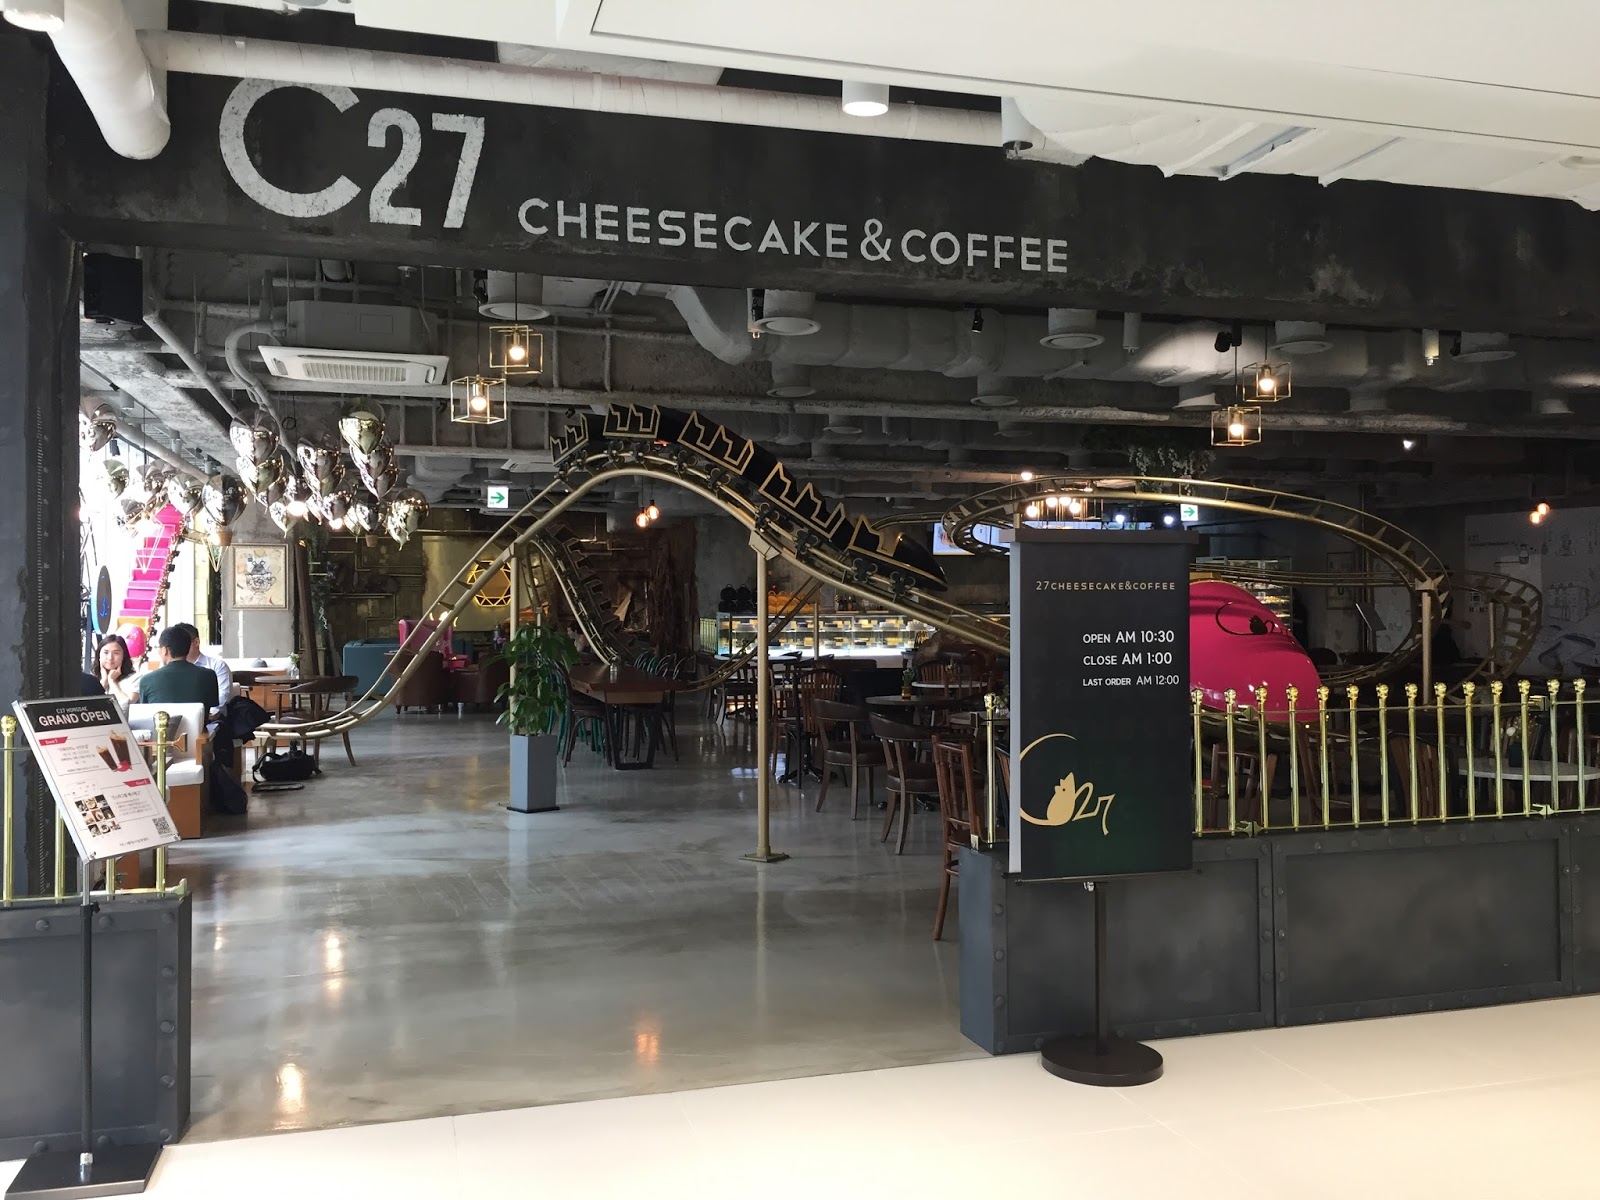 C27 cheese cake coffee